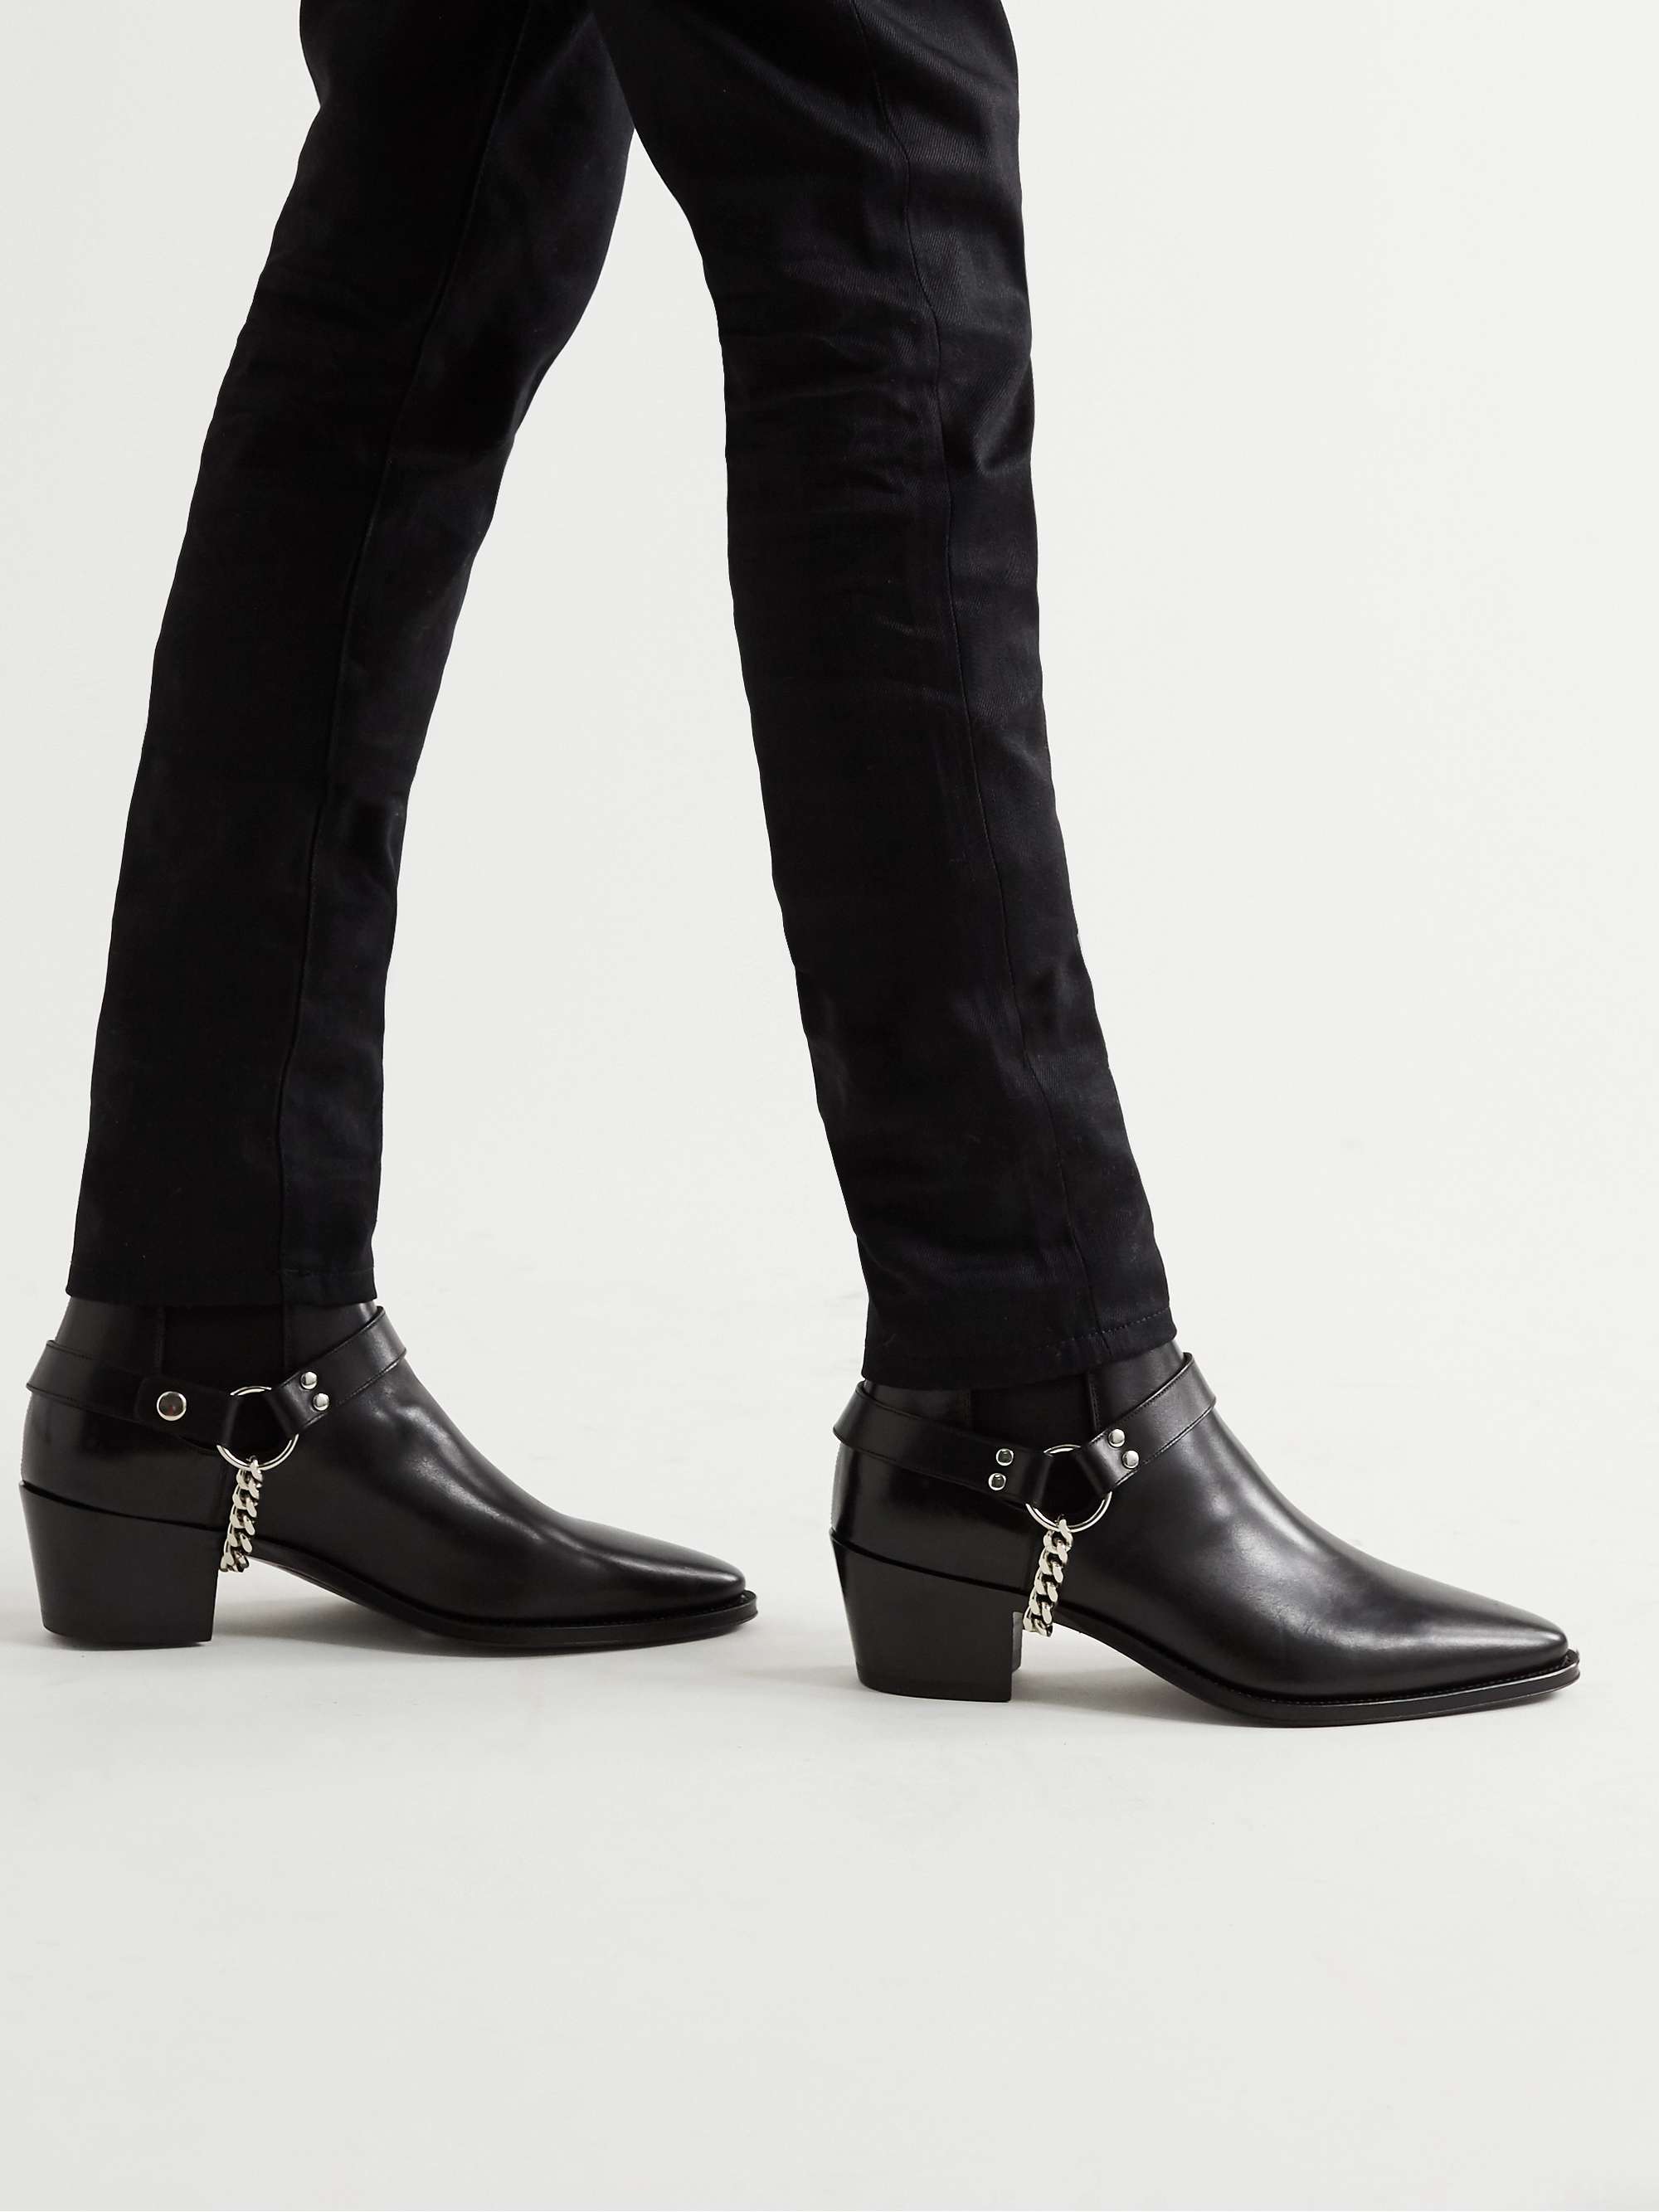 CELINE HOMME Chain-Embellished Leather Chelsea Boots | MR PORTER